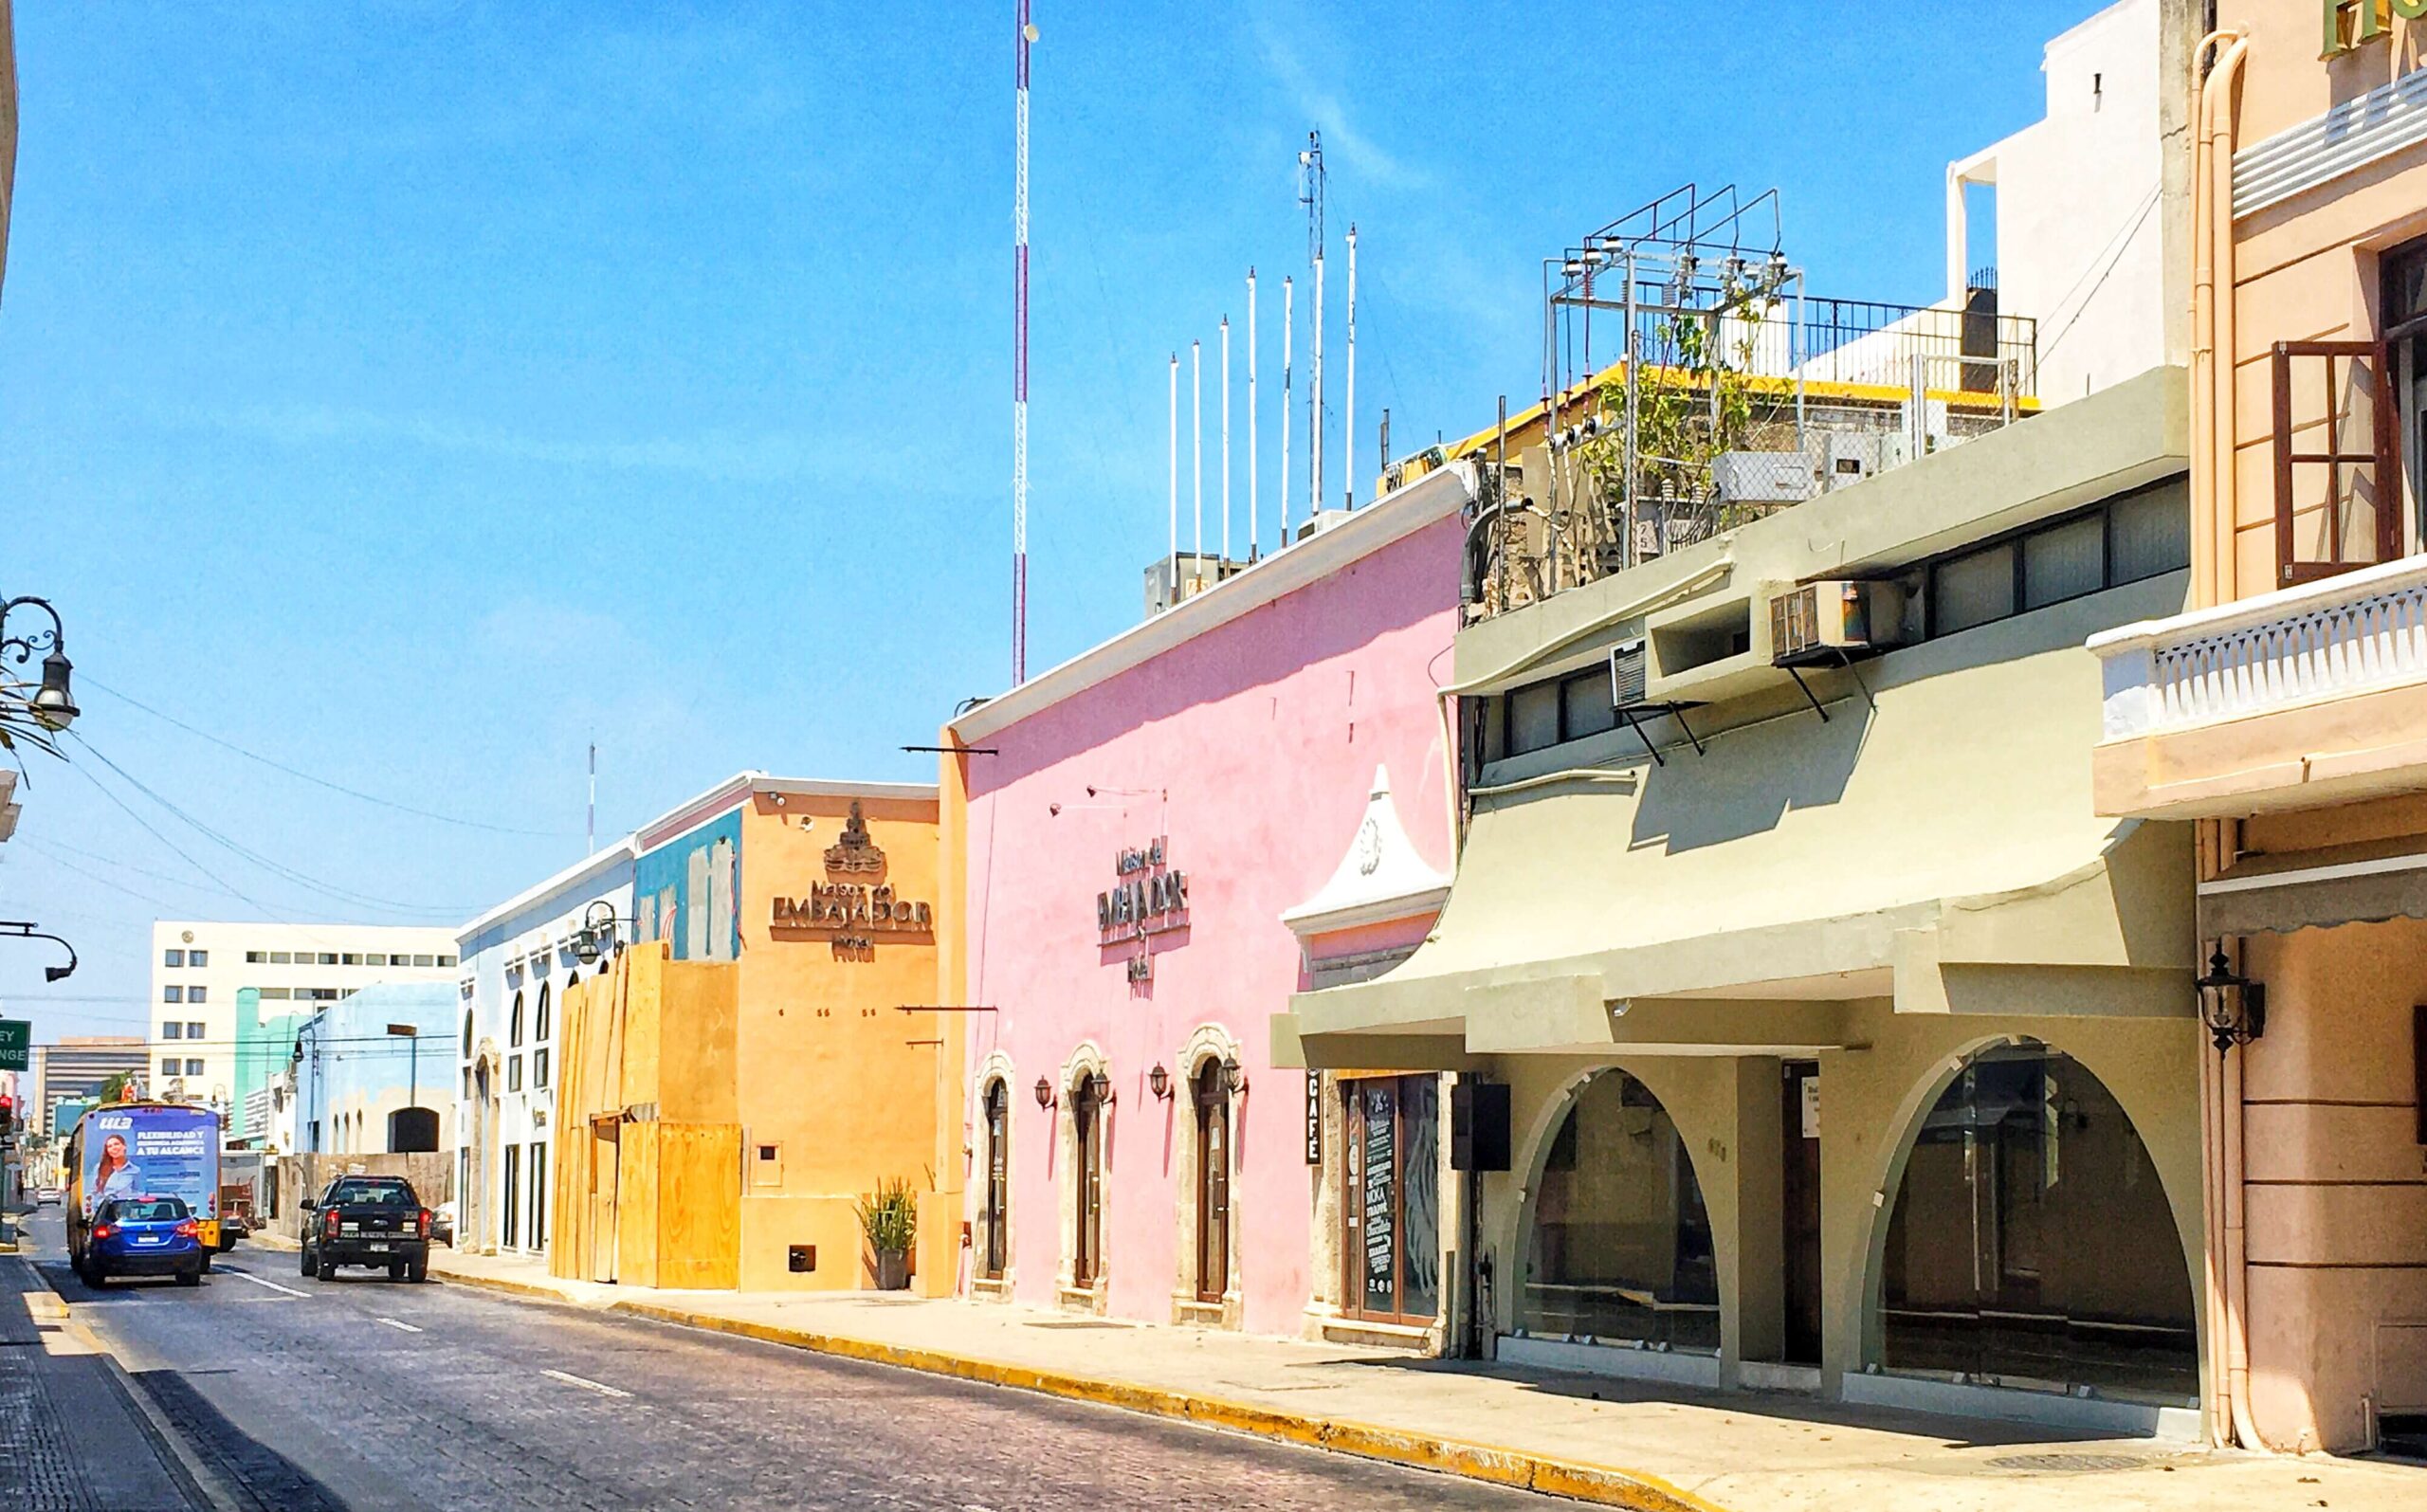 Calle 60 in Merida Mexico